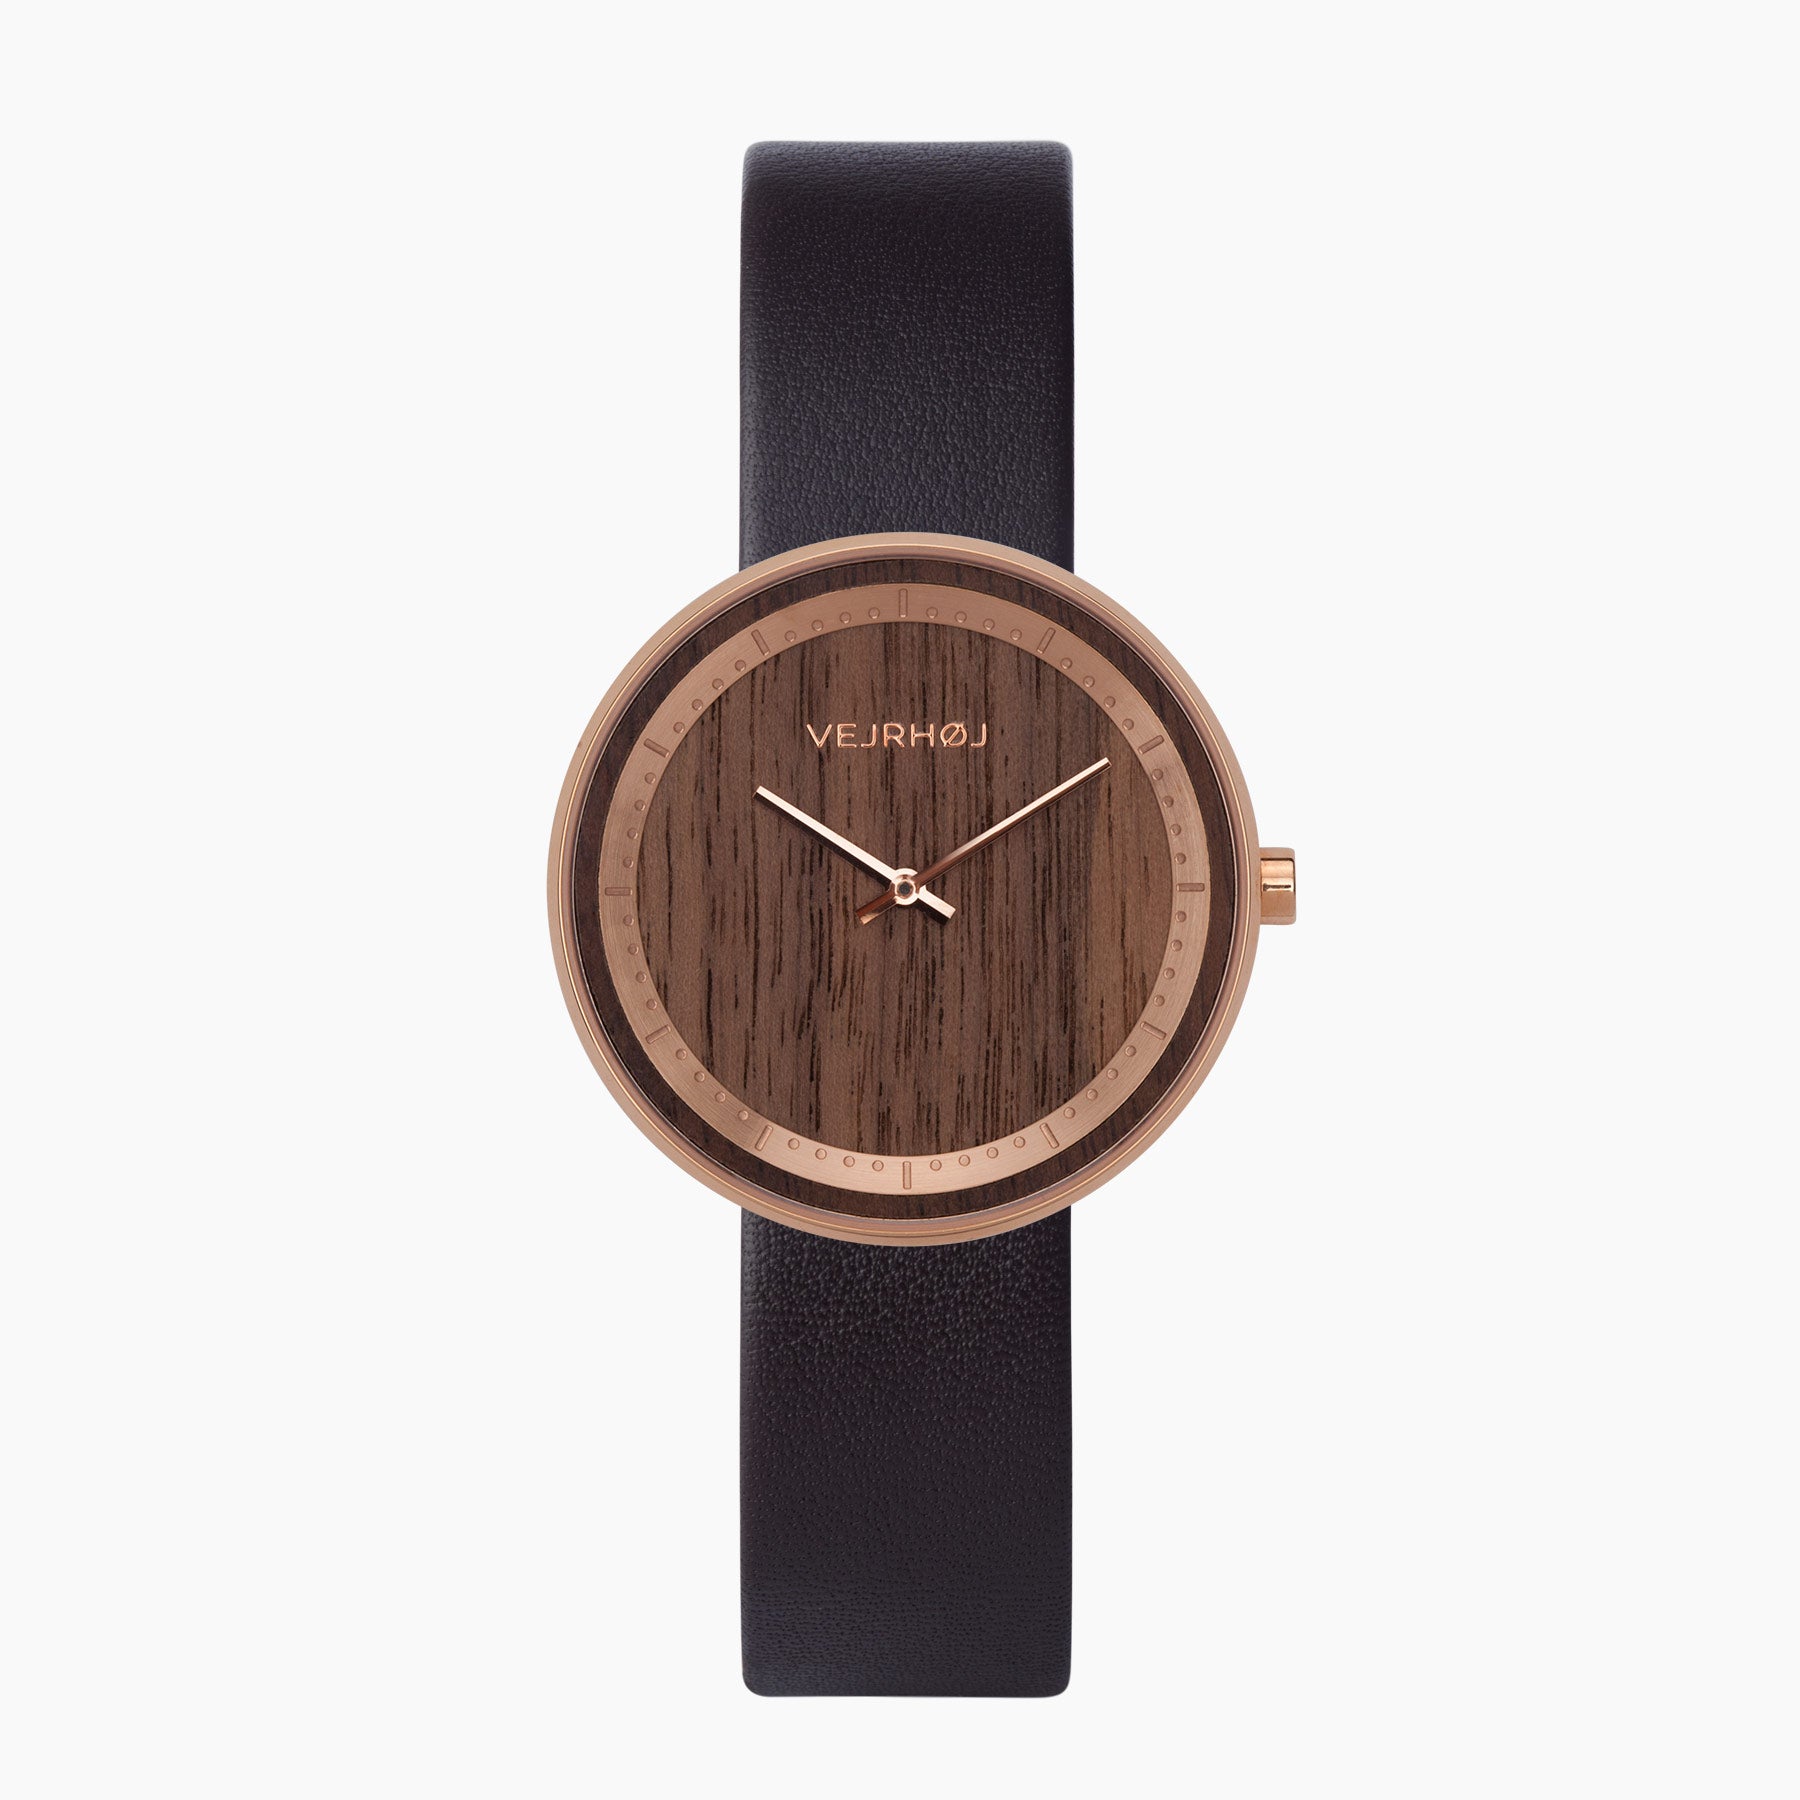 Petite The ROSE - VEJRHØJ wood watch